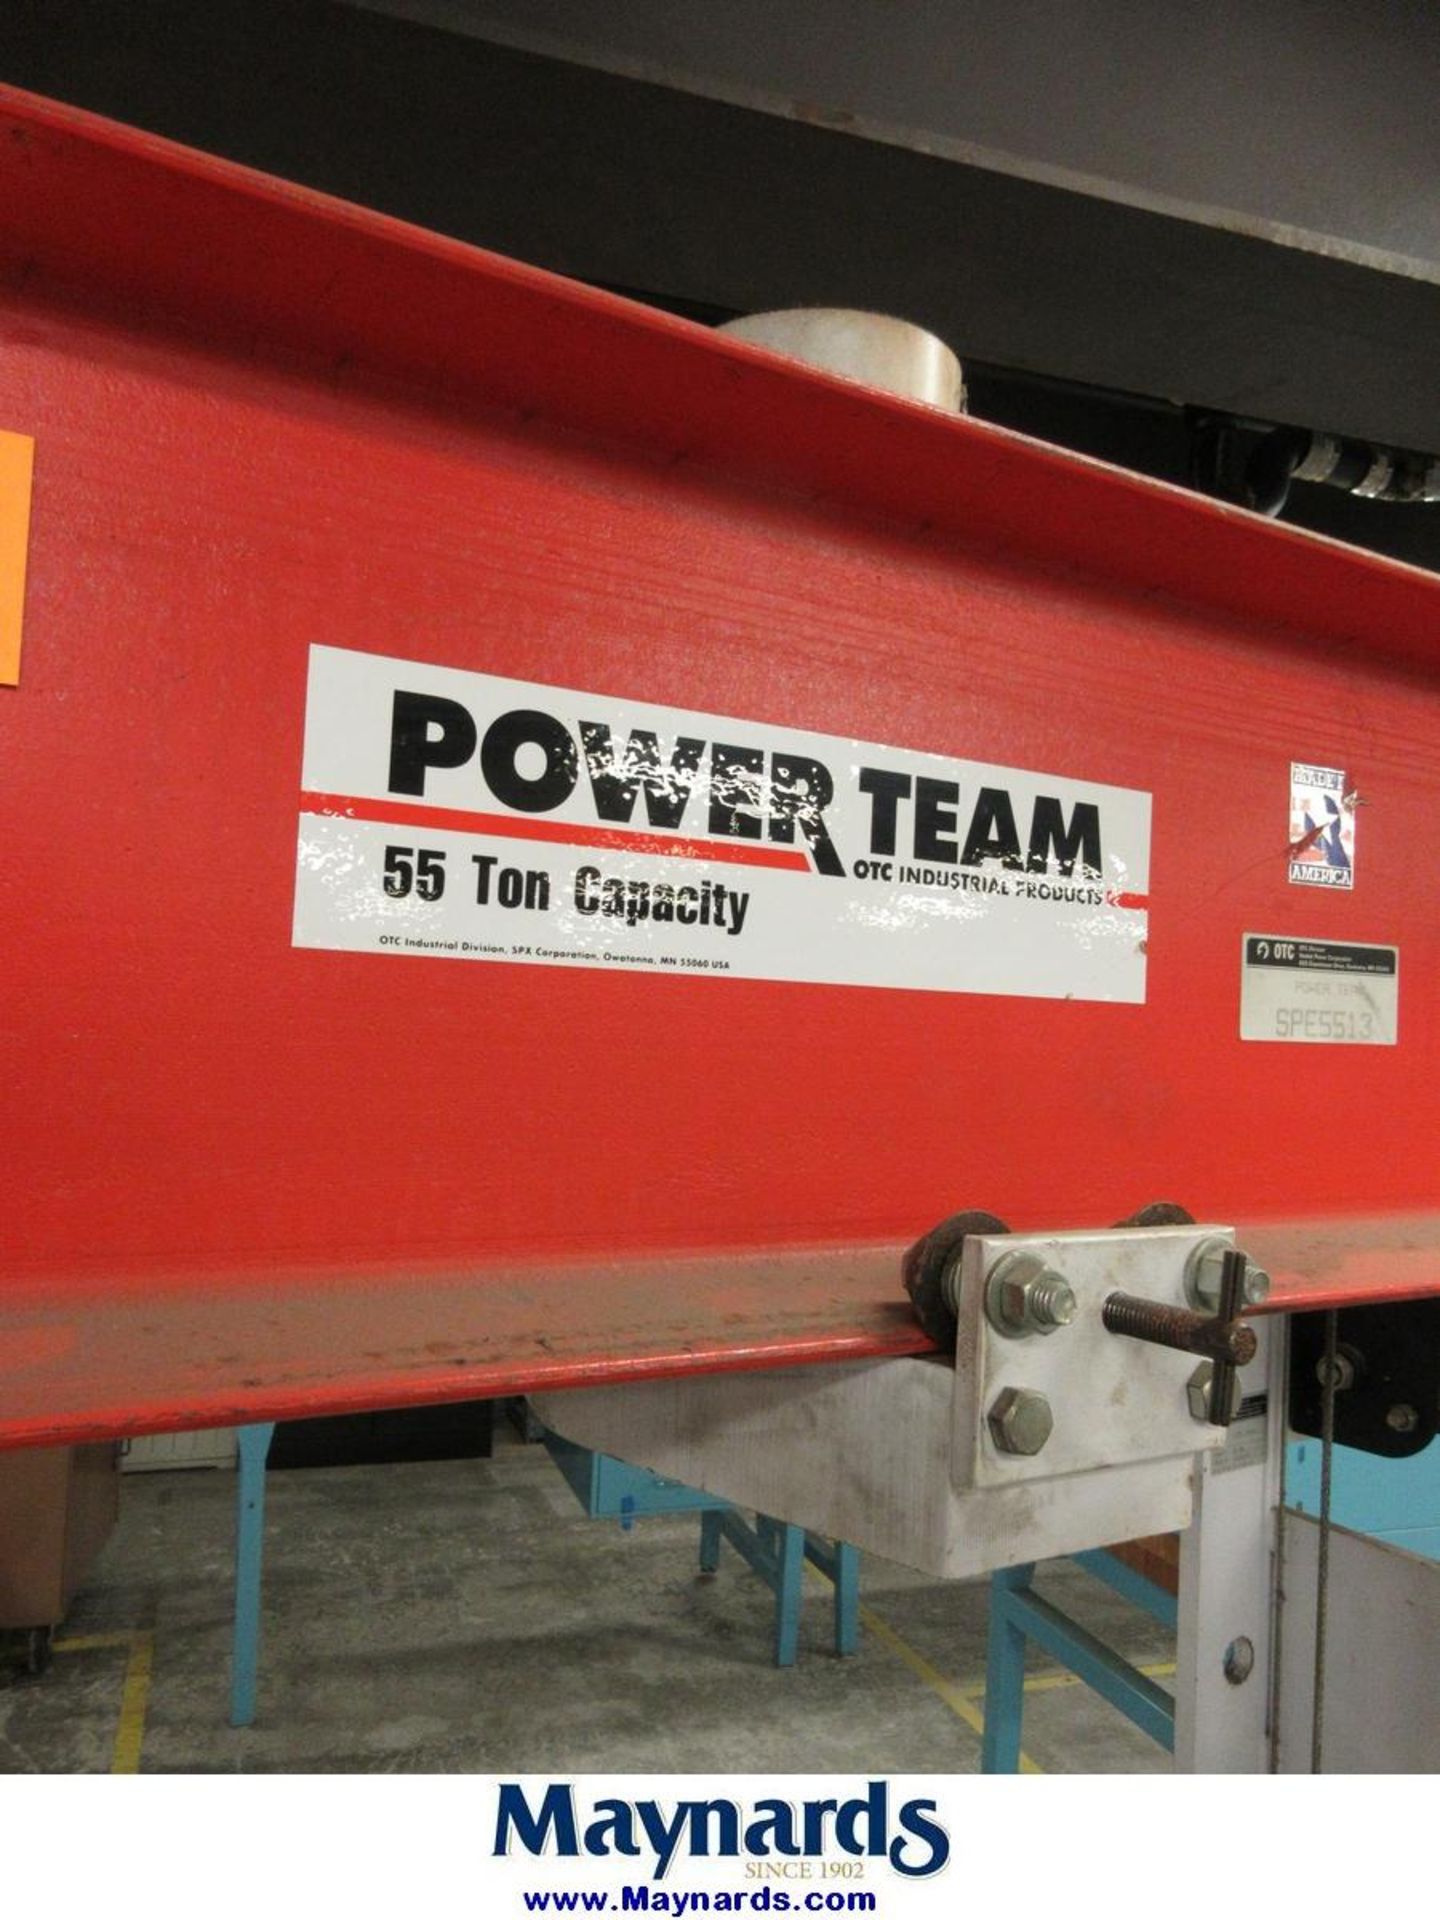 Power Team SPE5513 55-Ton Hydraulic H-Frame Shop Press - Image 3 of 6